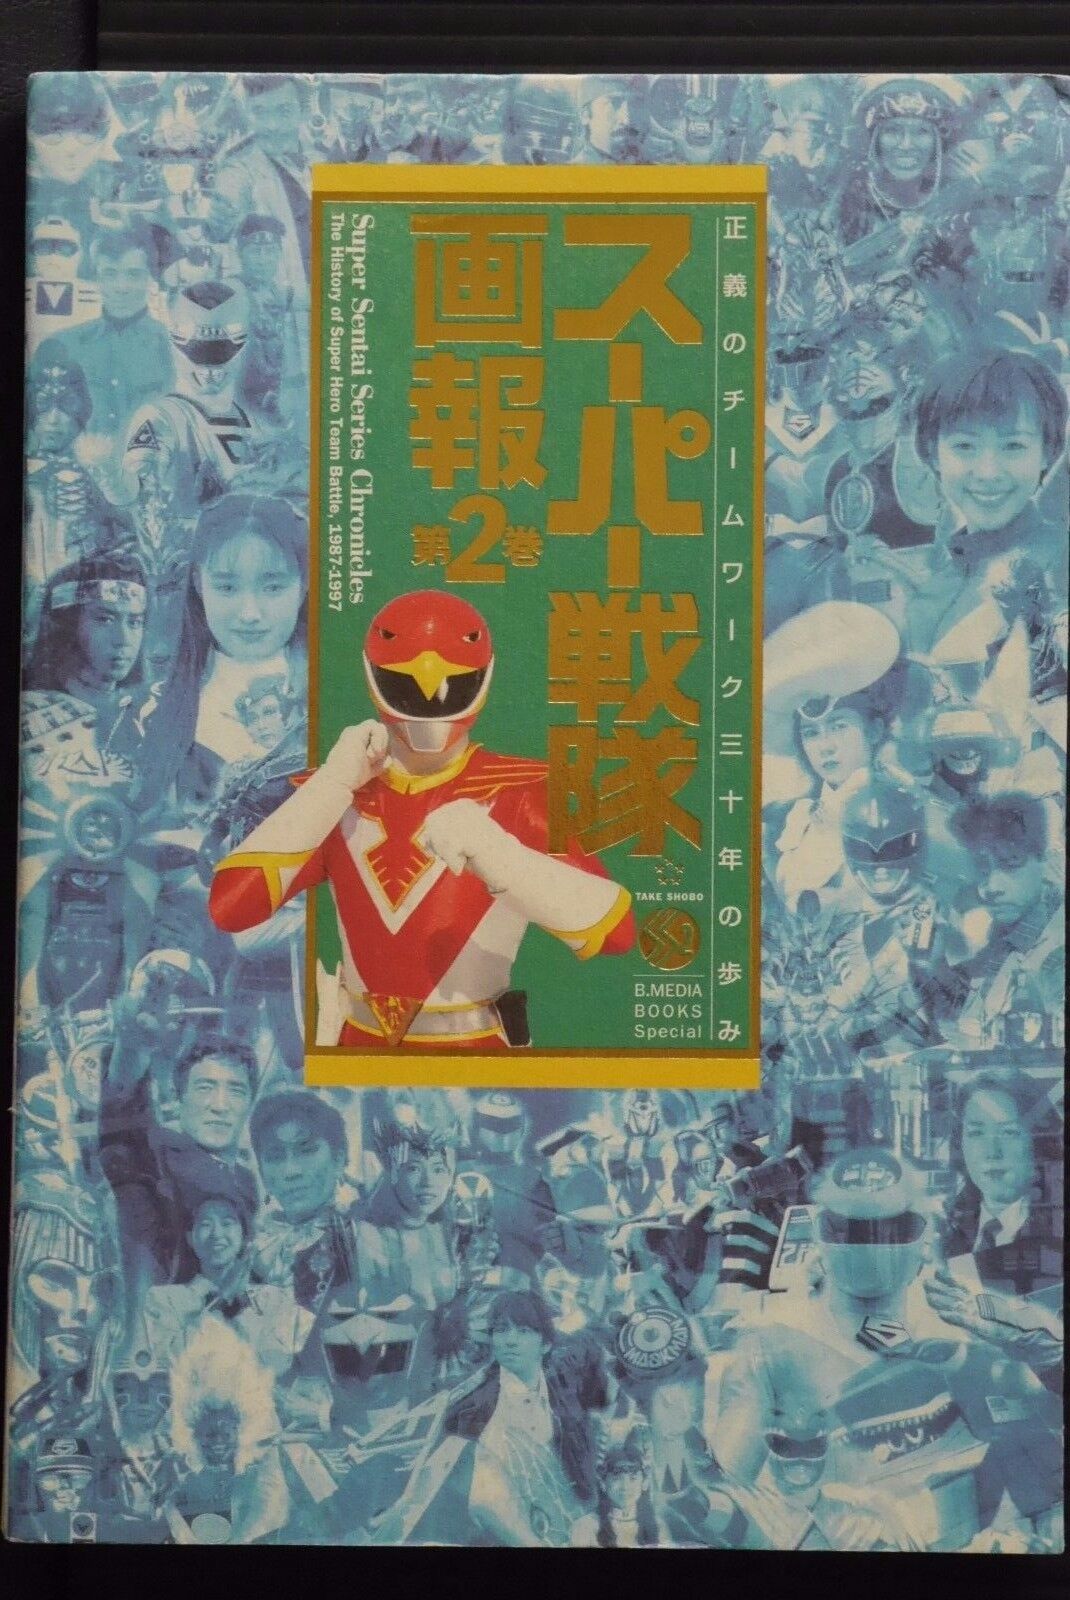 JAPAN Super Sentai series Chronicles vol.2 (Guide Book)